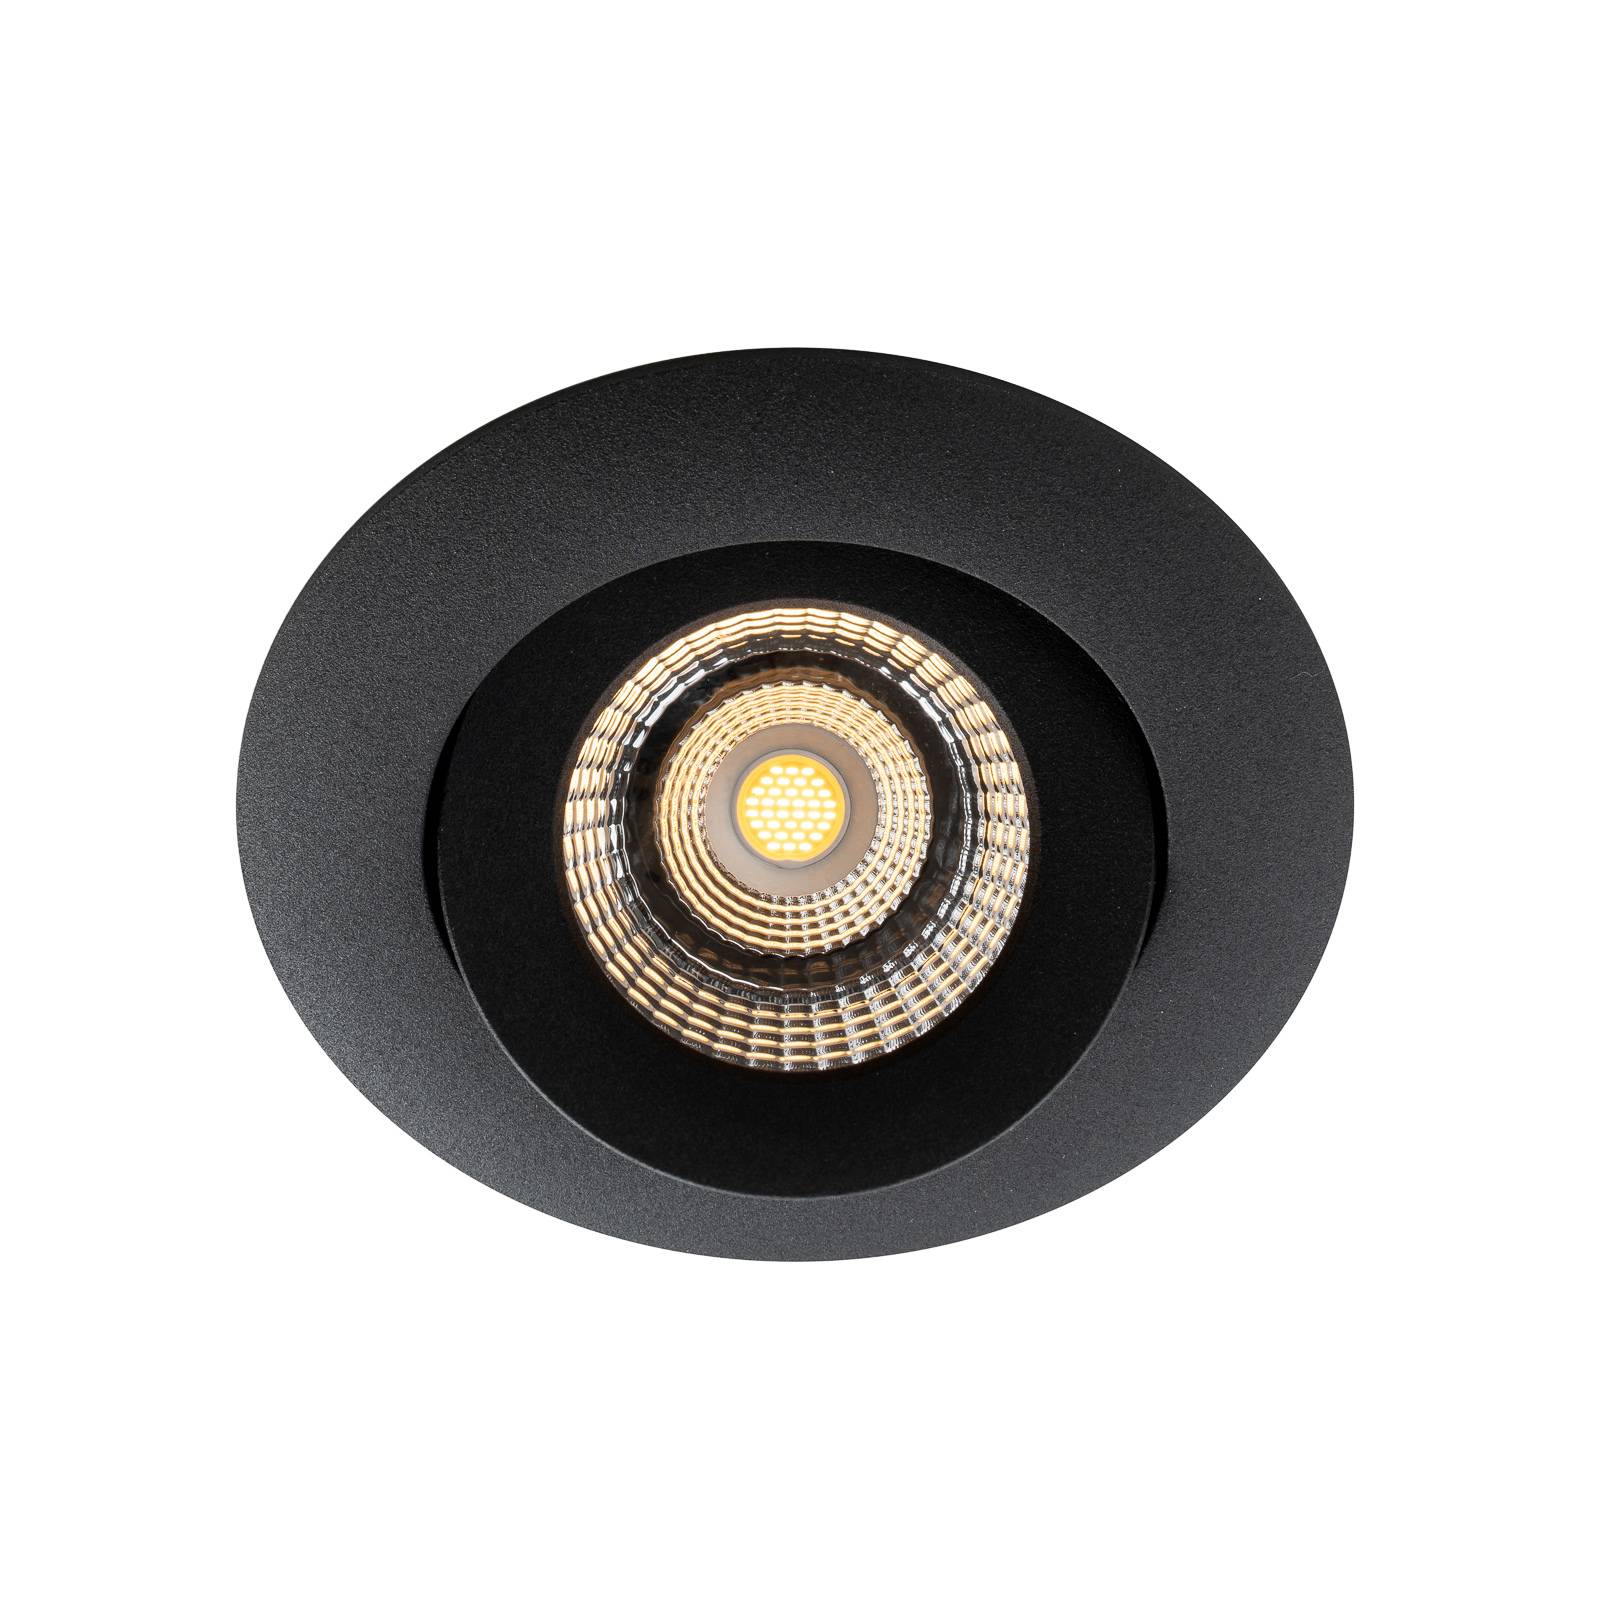 SLC One 360° lampe LED dim-to-warm noire